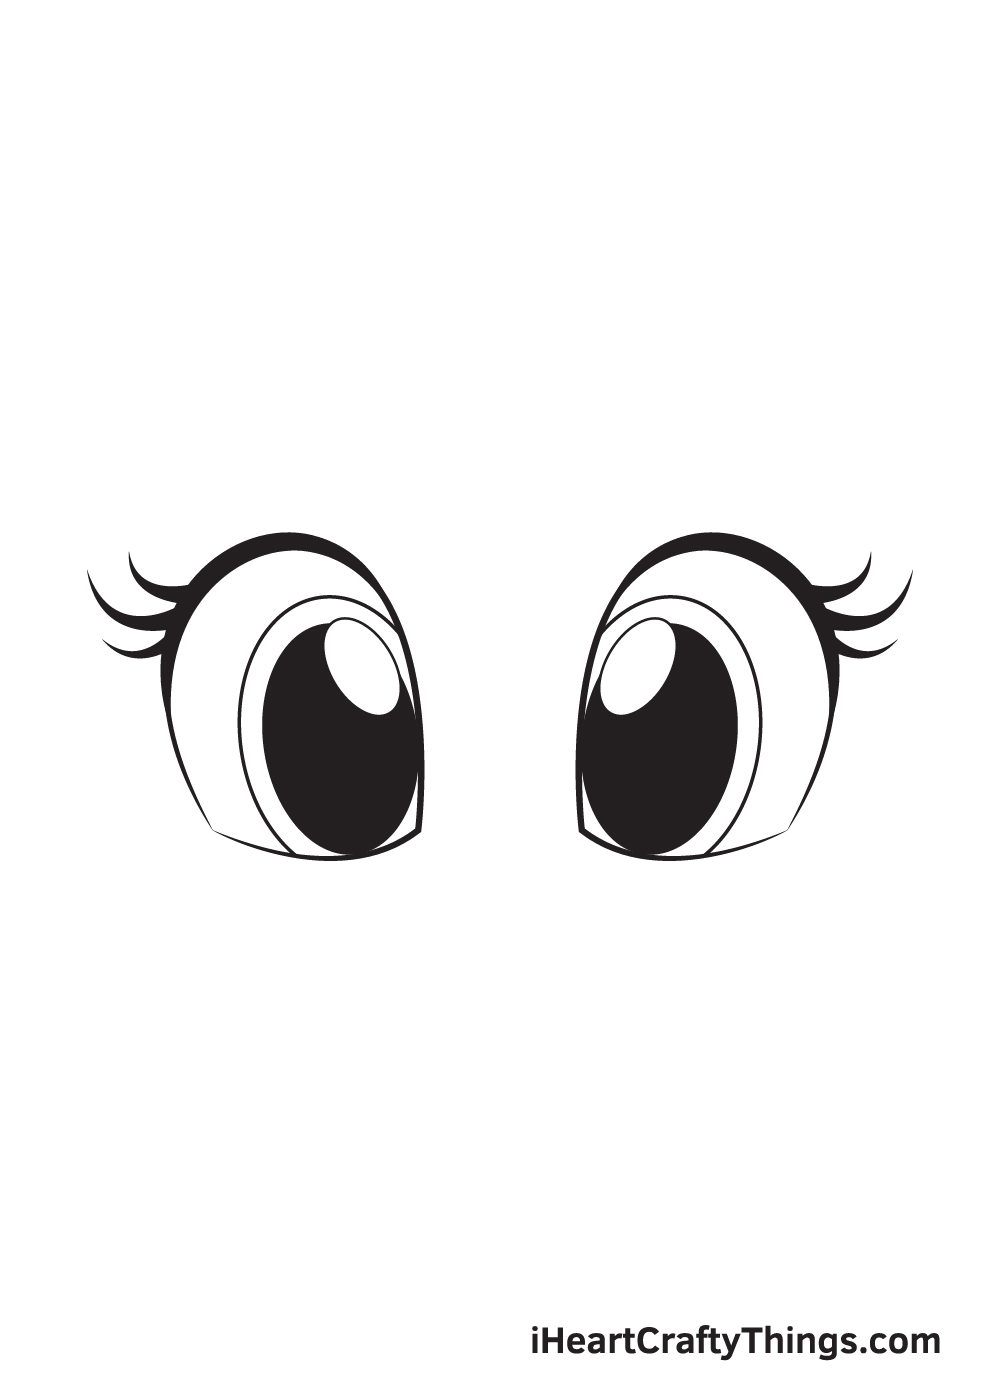 How to draw a easy eye - YouTube-saigonsouth.com.vn